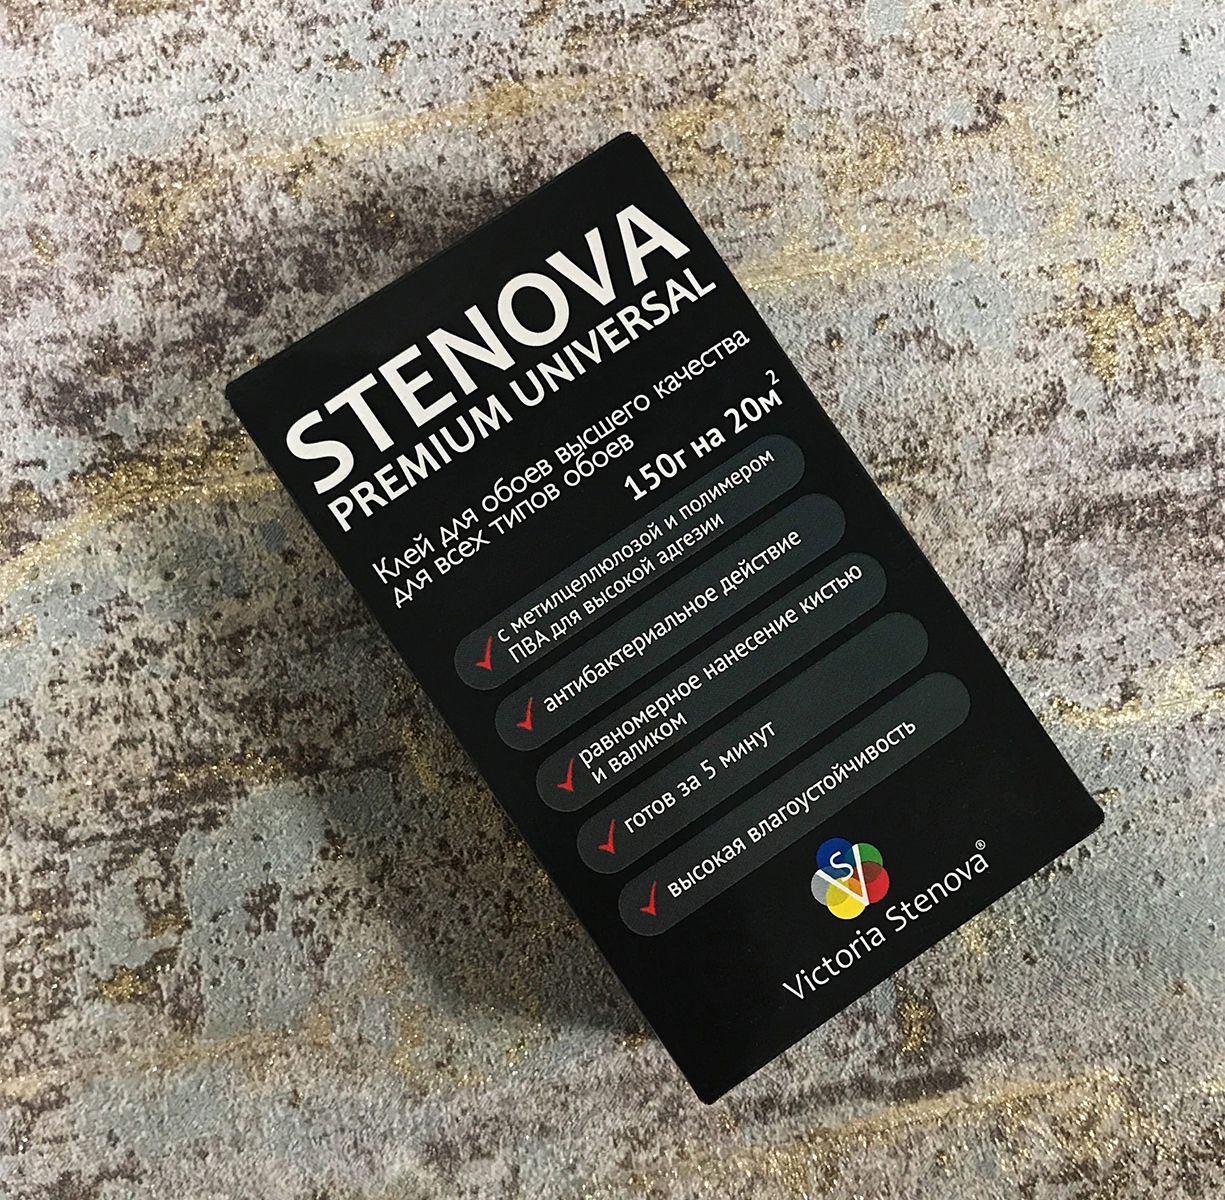 Клей STENOVA Premium Universal